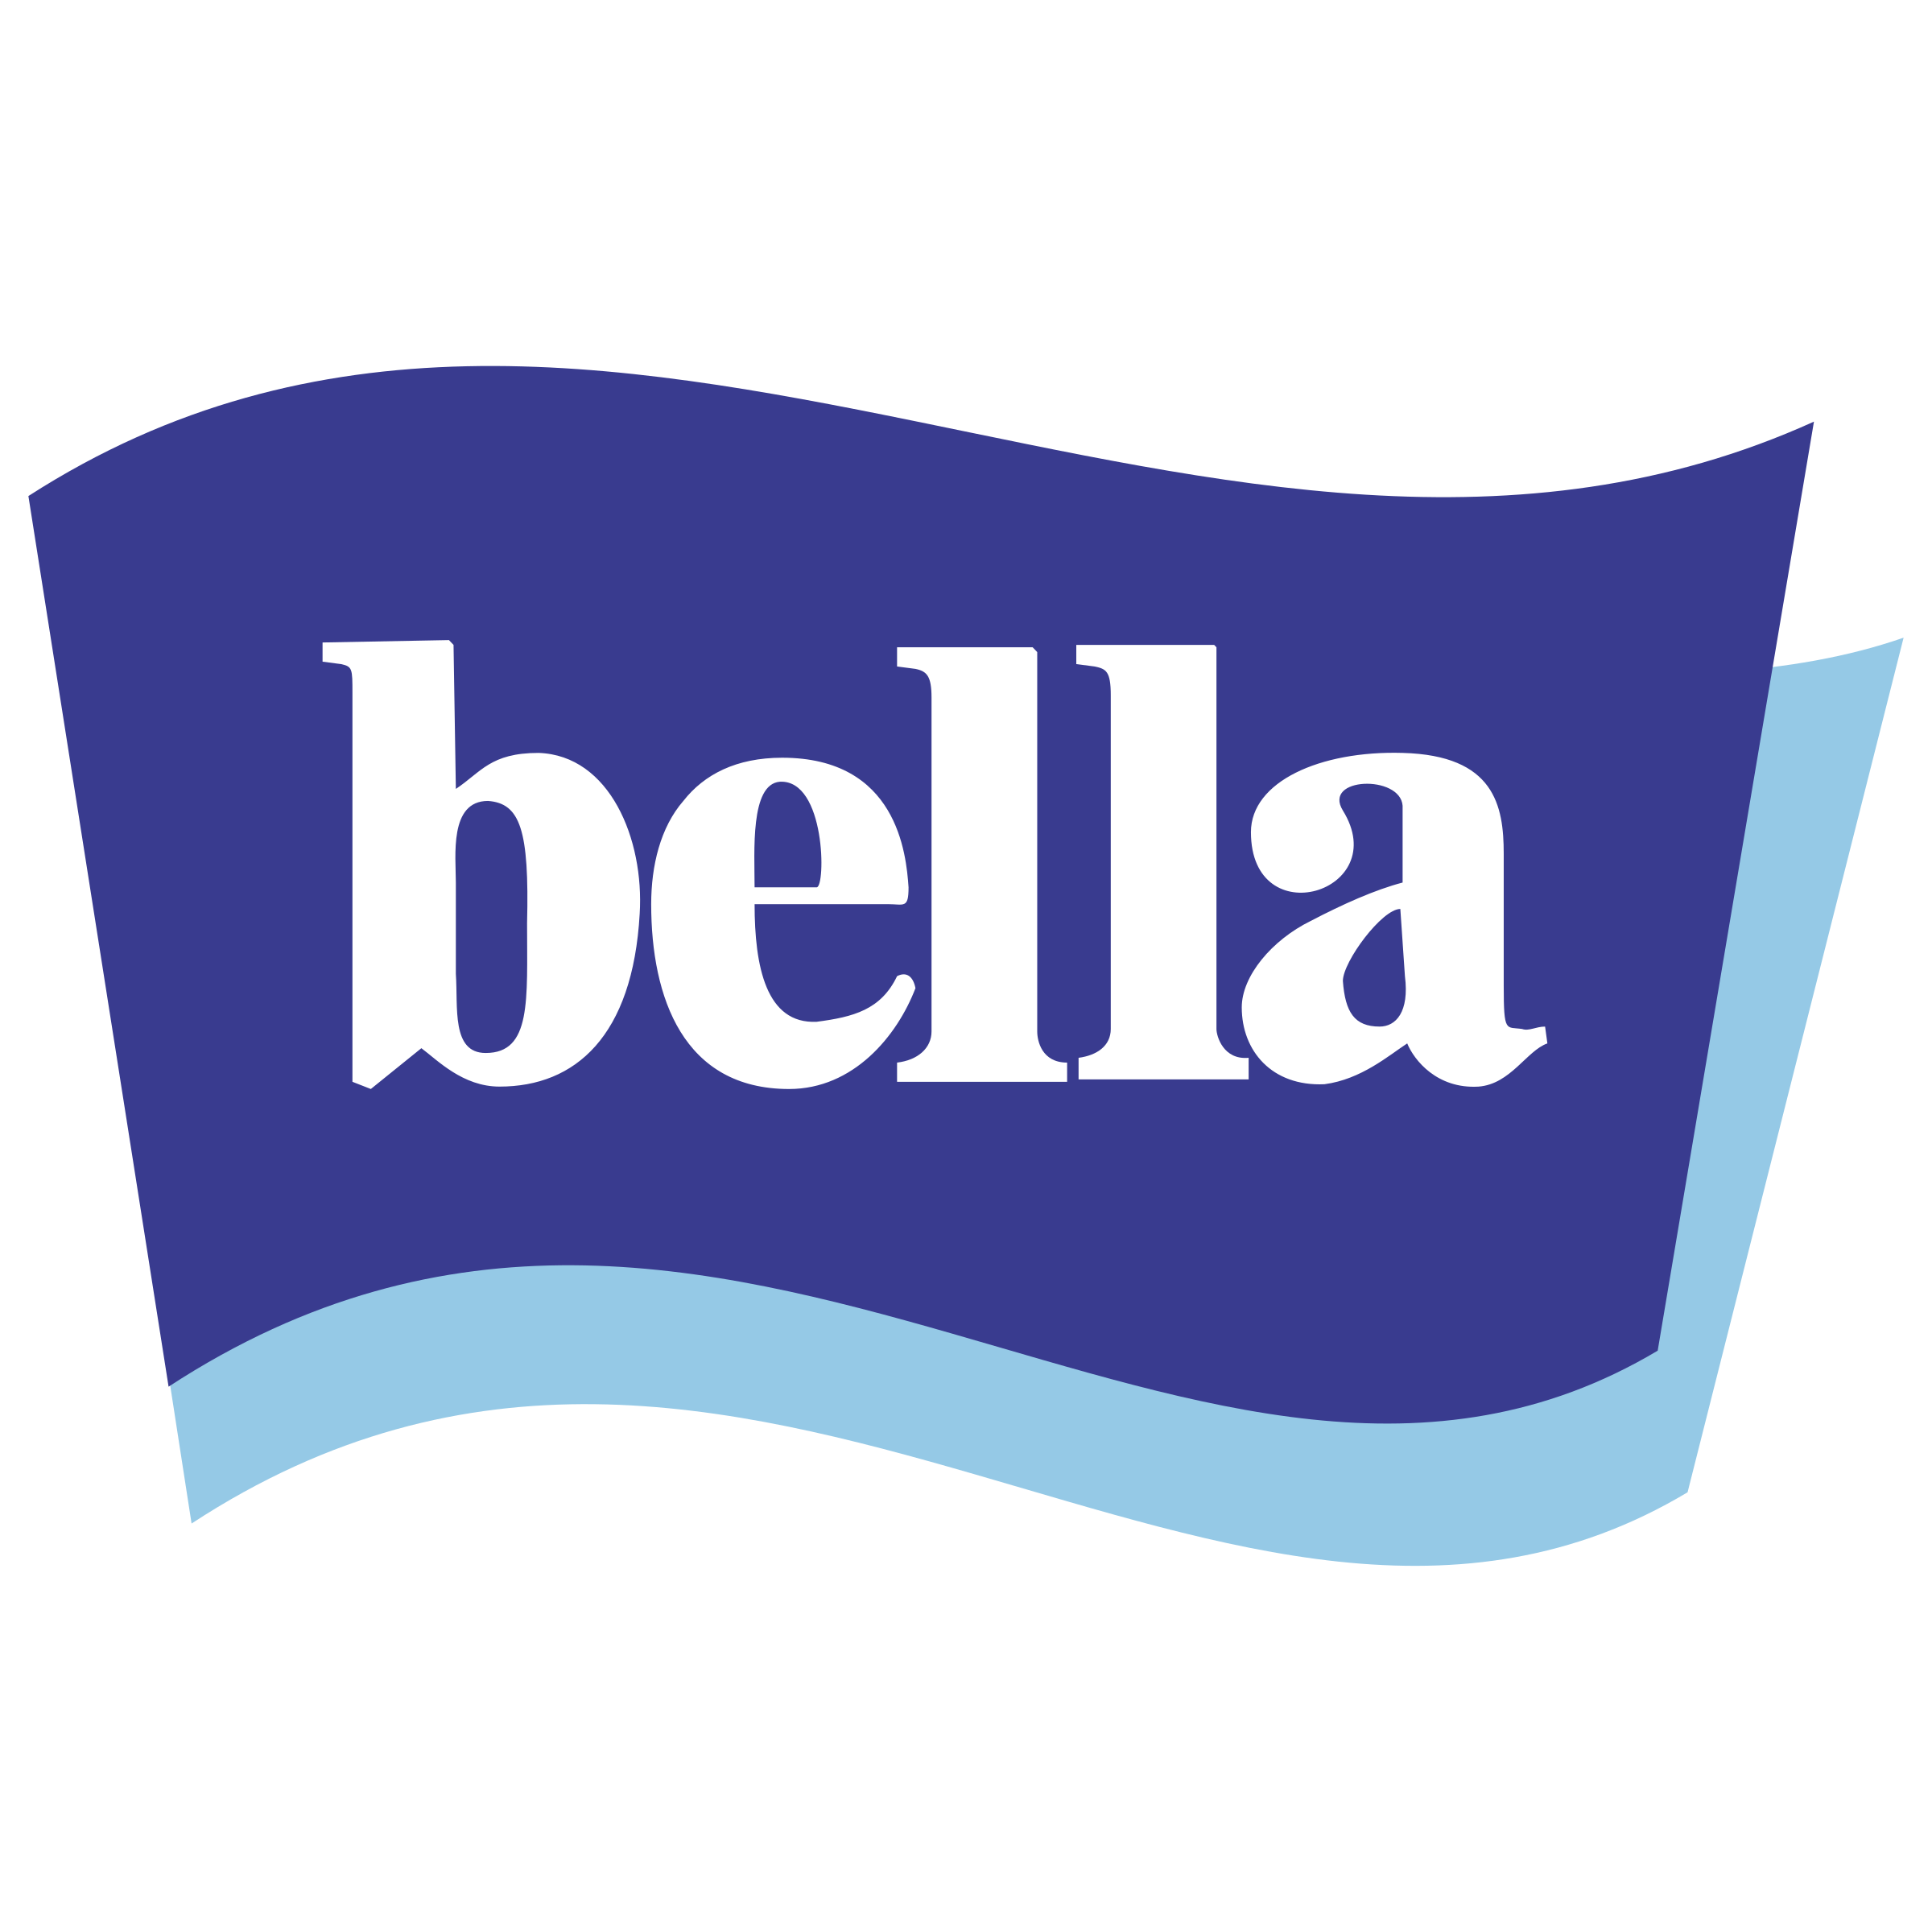 BELLA - Niram